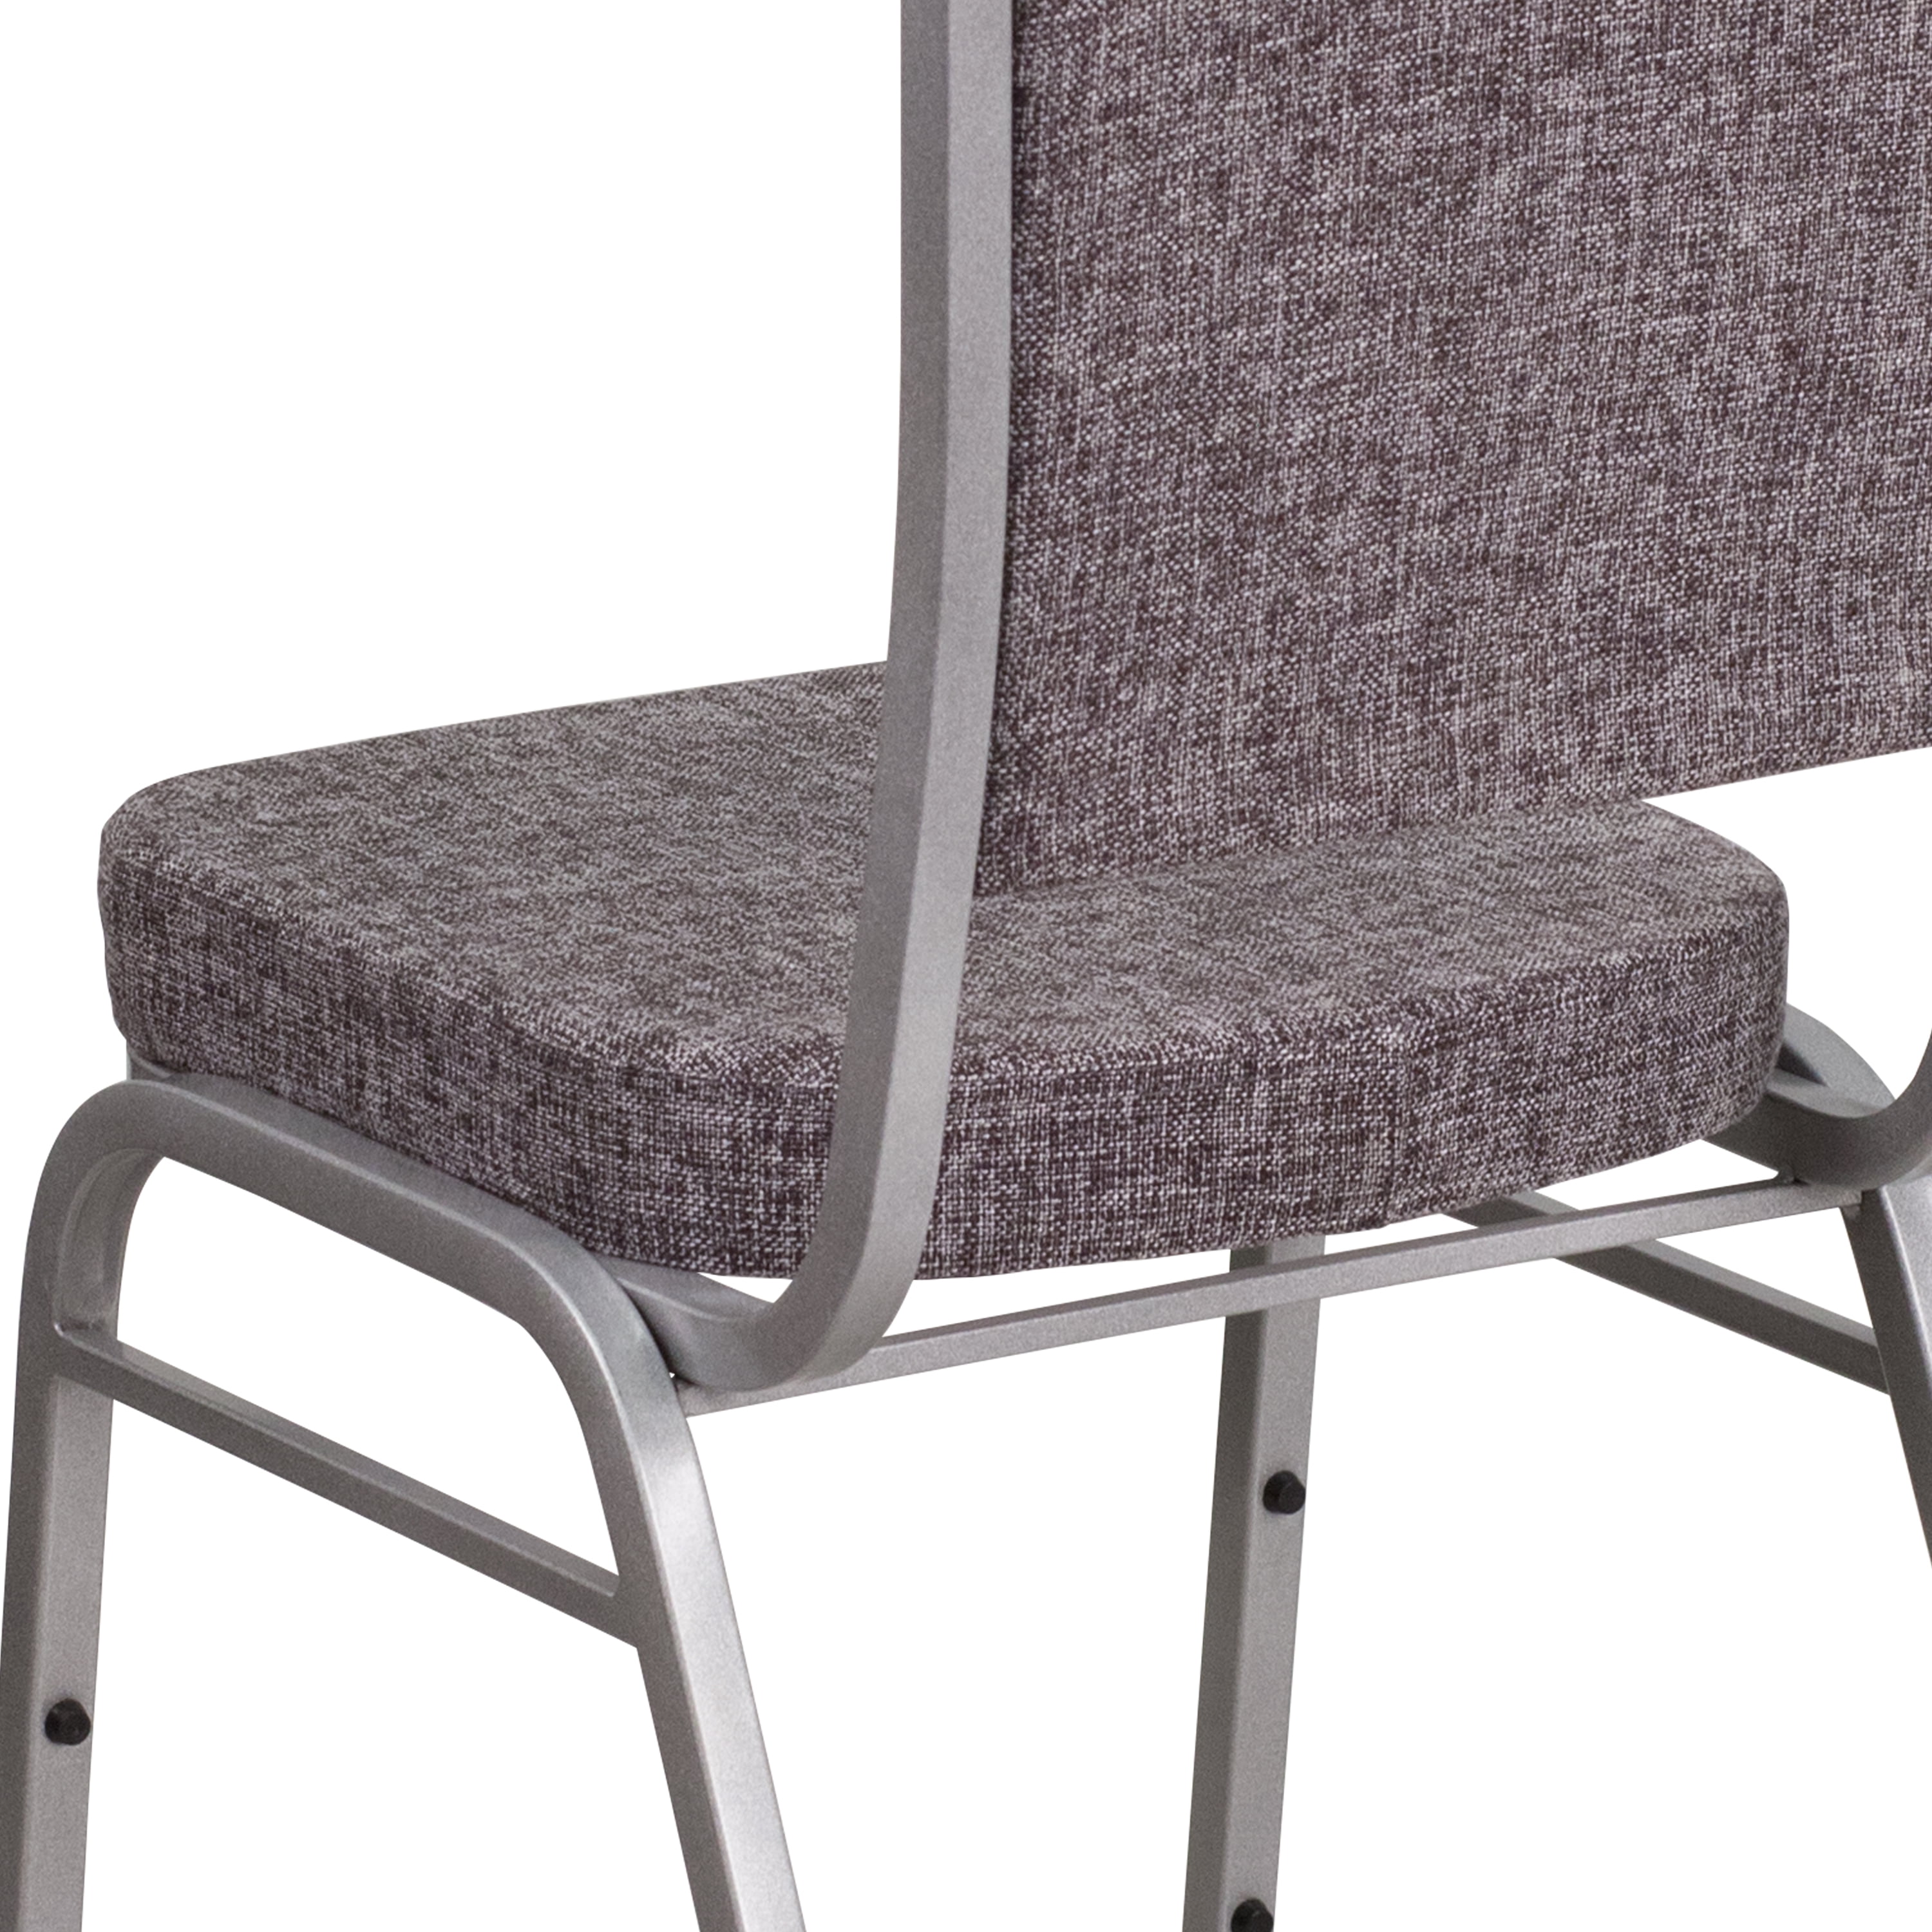 Flash Furniture 4 Pk HERCULES Series Crown Back Stacking Banquet Chair in Burgu 